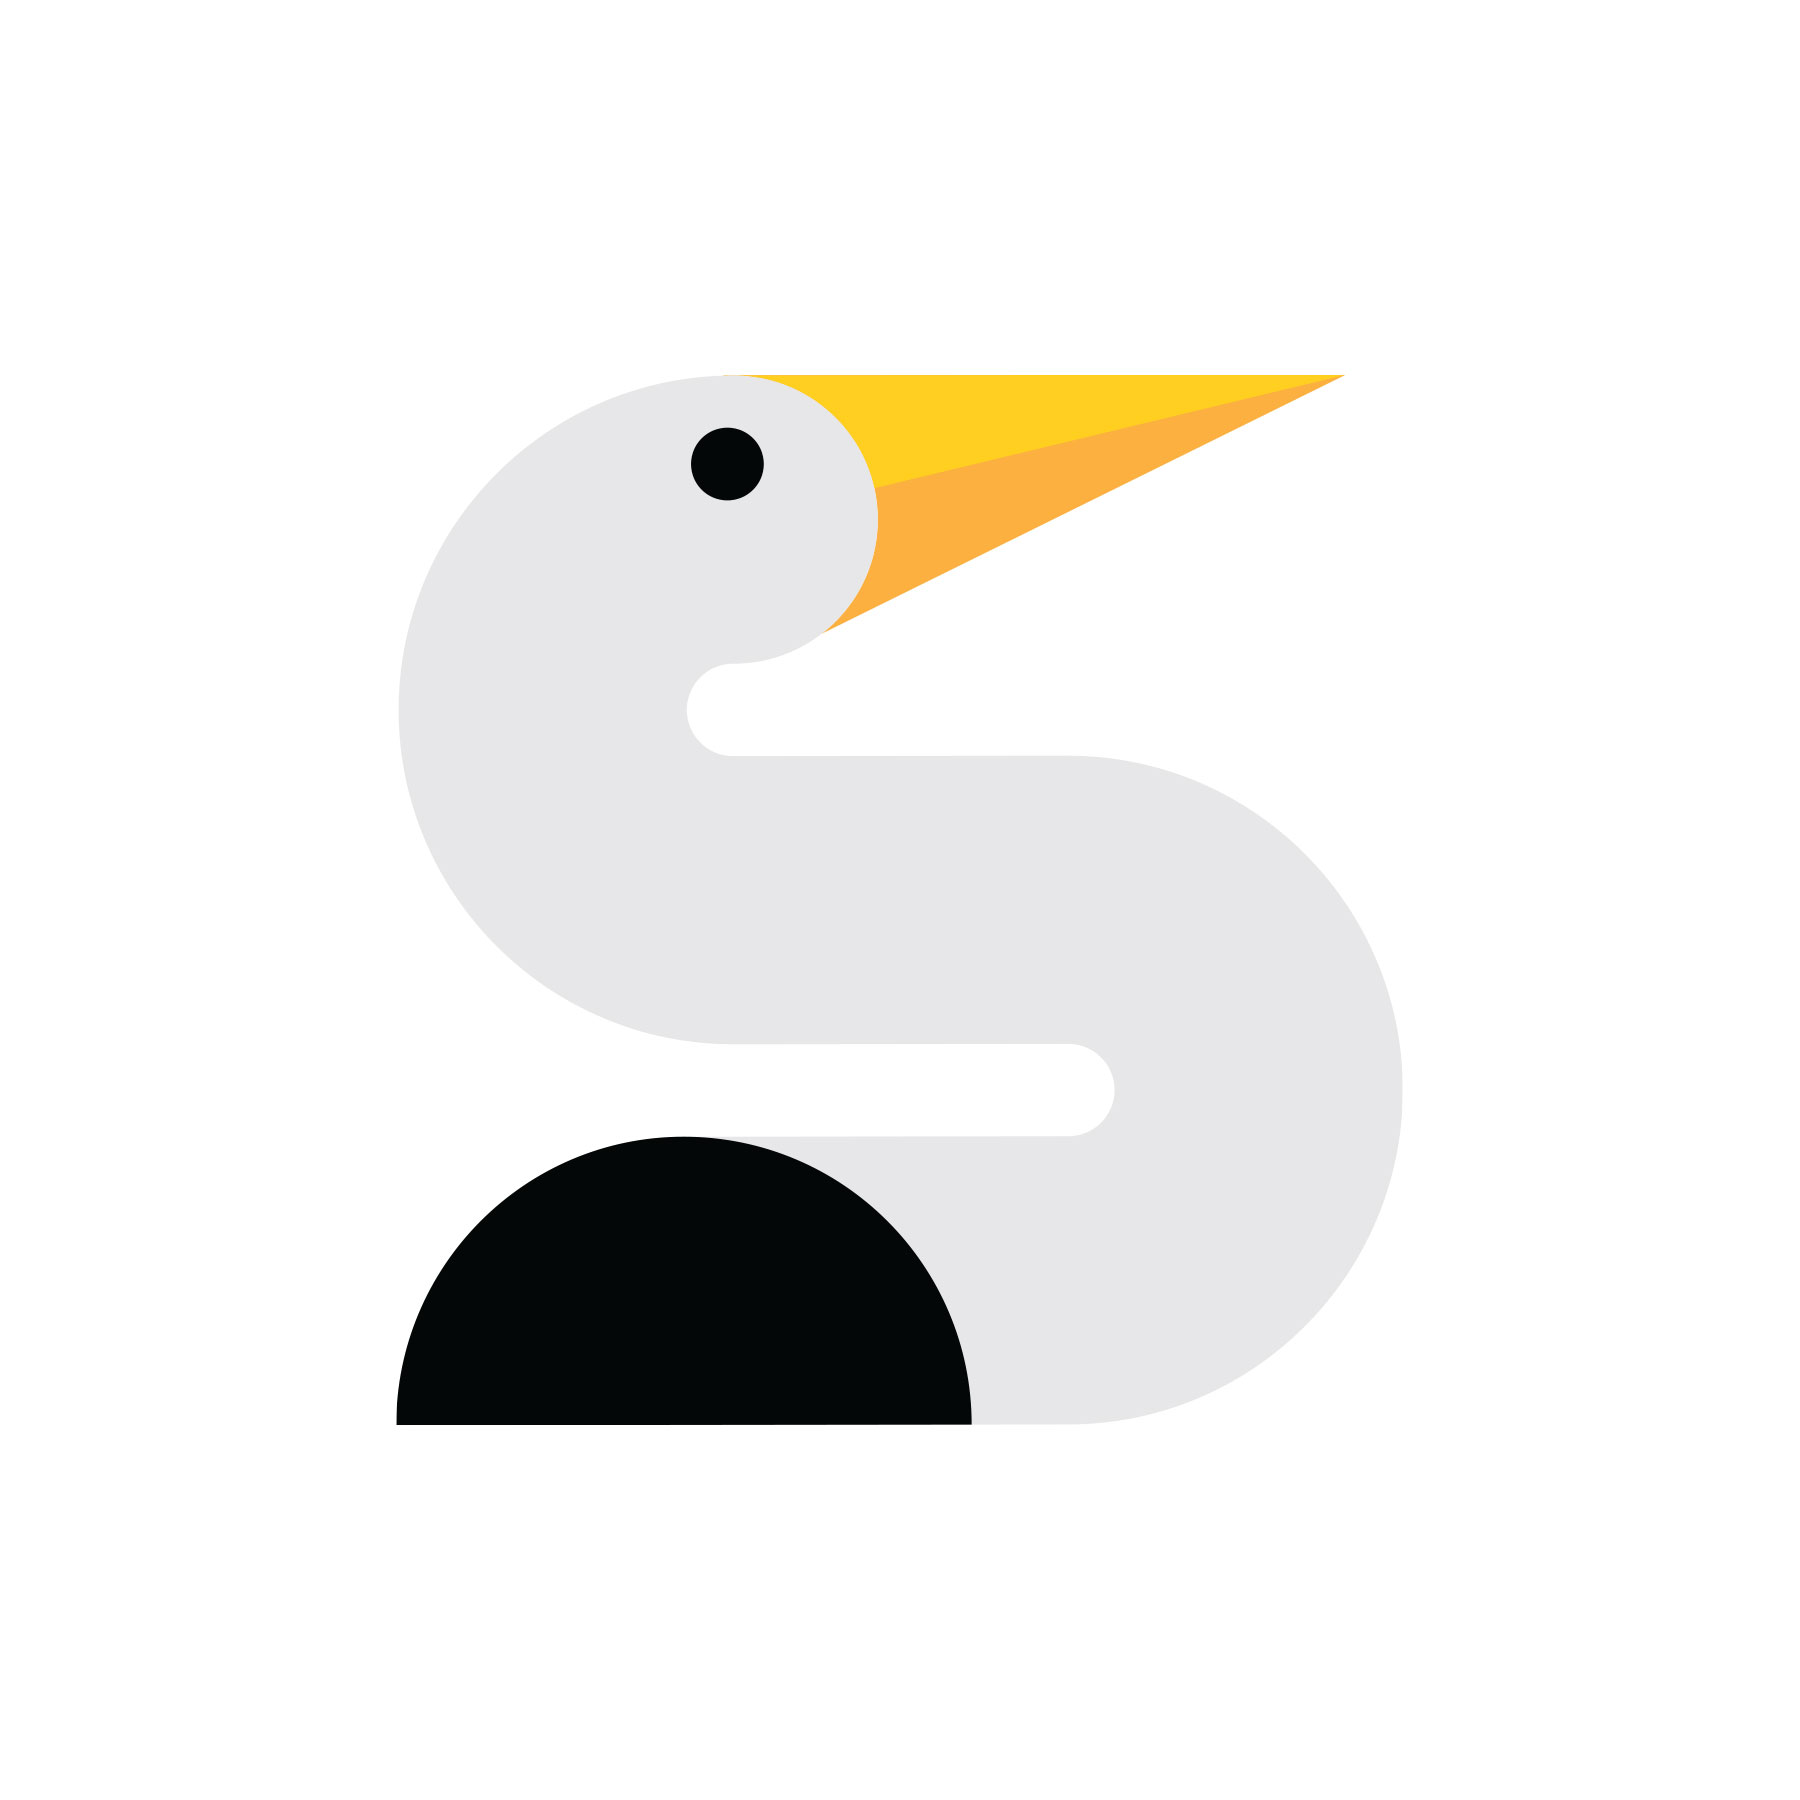 Sasha Stork logo design by logo designer Chris Logsdon for your inspiration and for the worlds largest logo competition